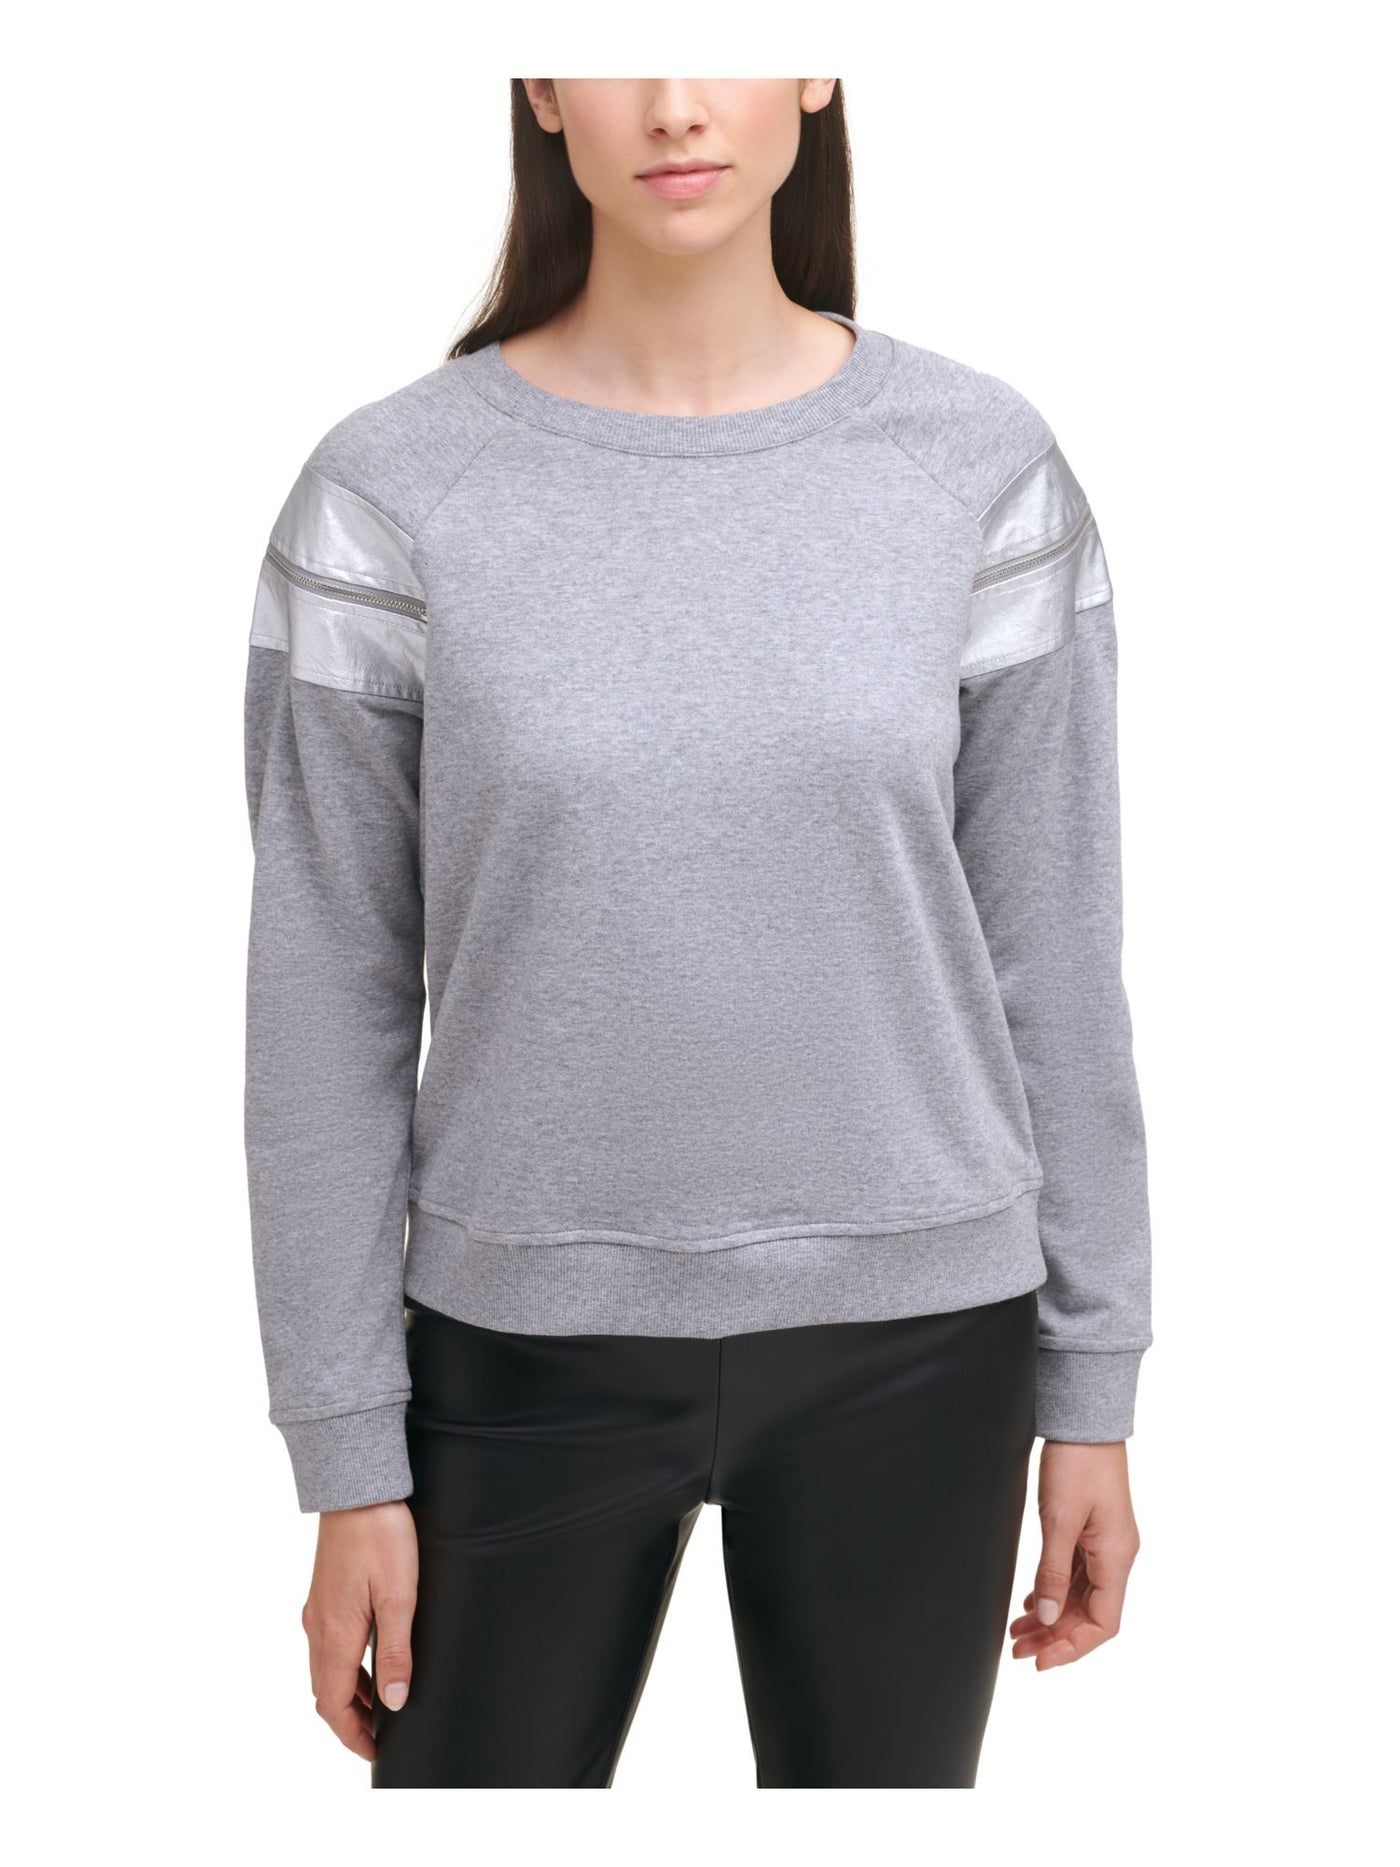 DKNY Womens Gray Zippered Metallic Crewneck Sweatshirt S